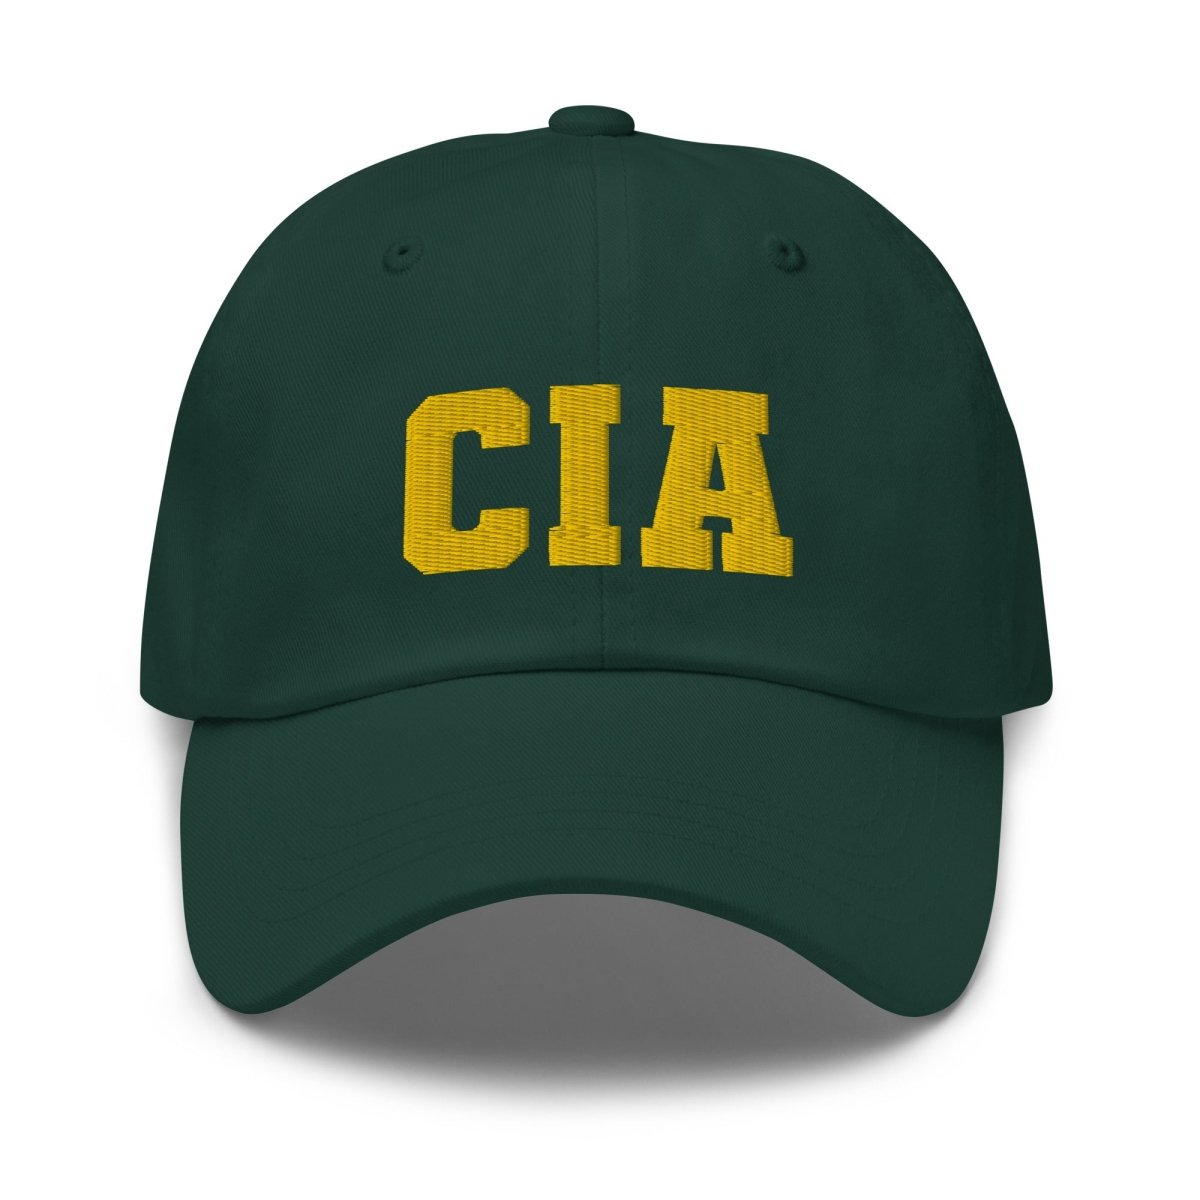 CIA Embroidered Cap - Spruce - AI Store